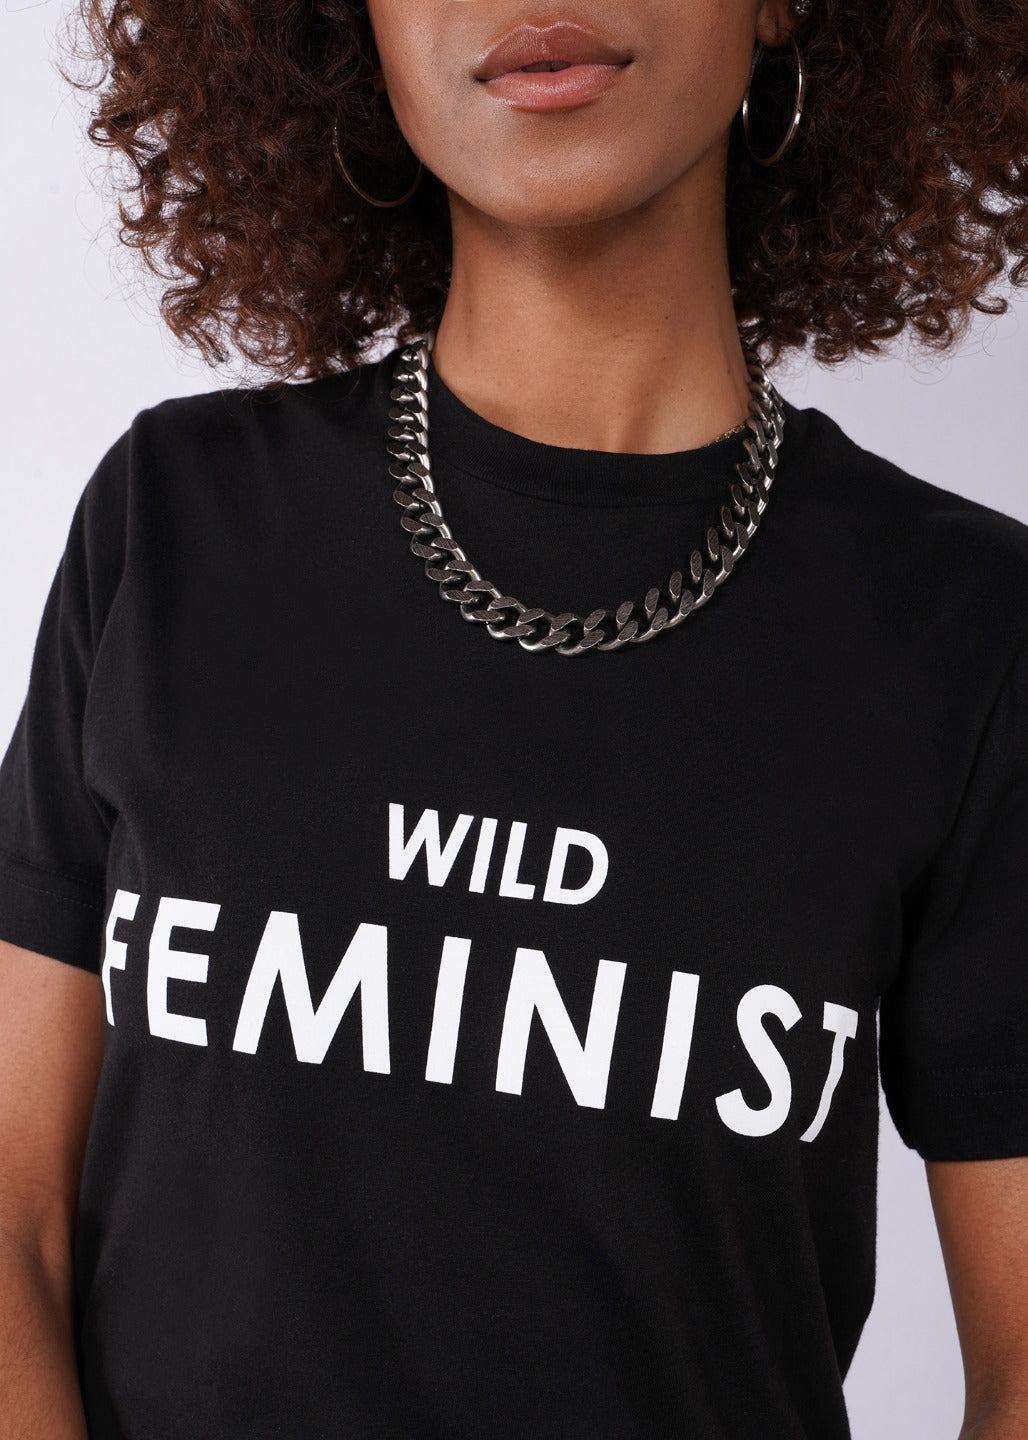 Wild Feminist® Tee shirt front graphic detail